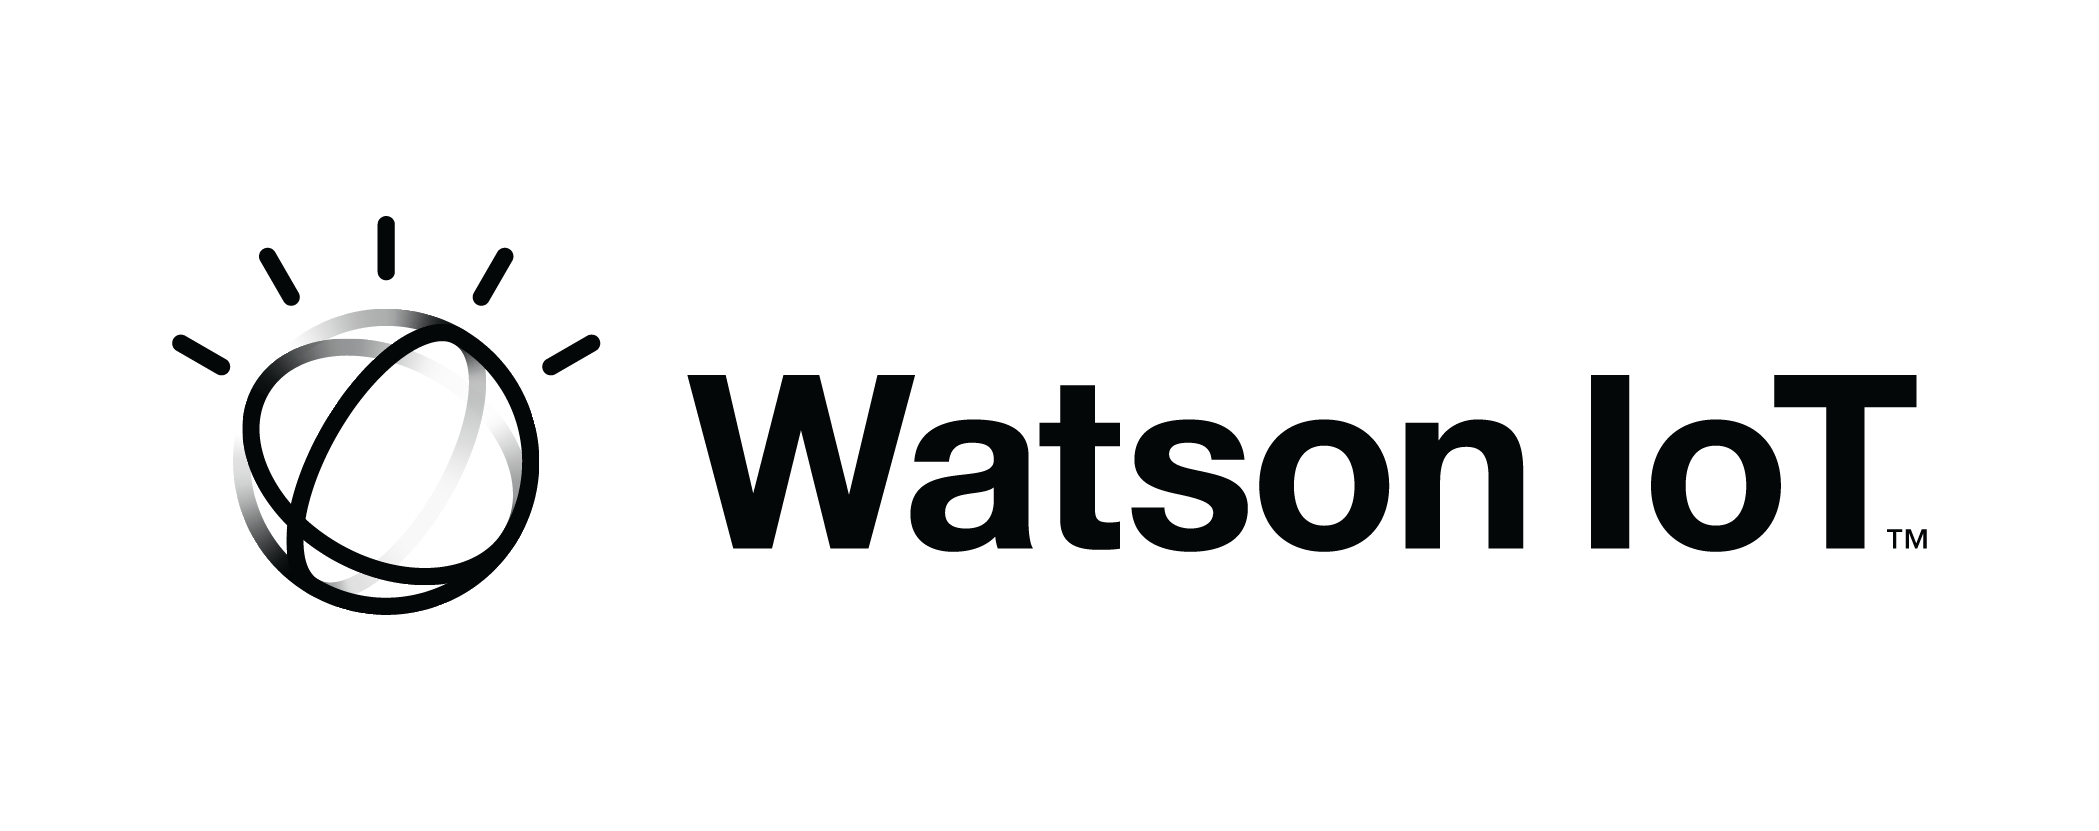 Watson Text Ibm Health Corp. PNG